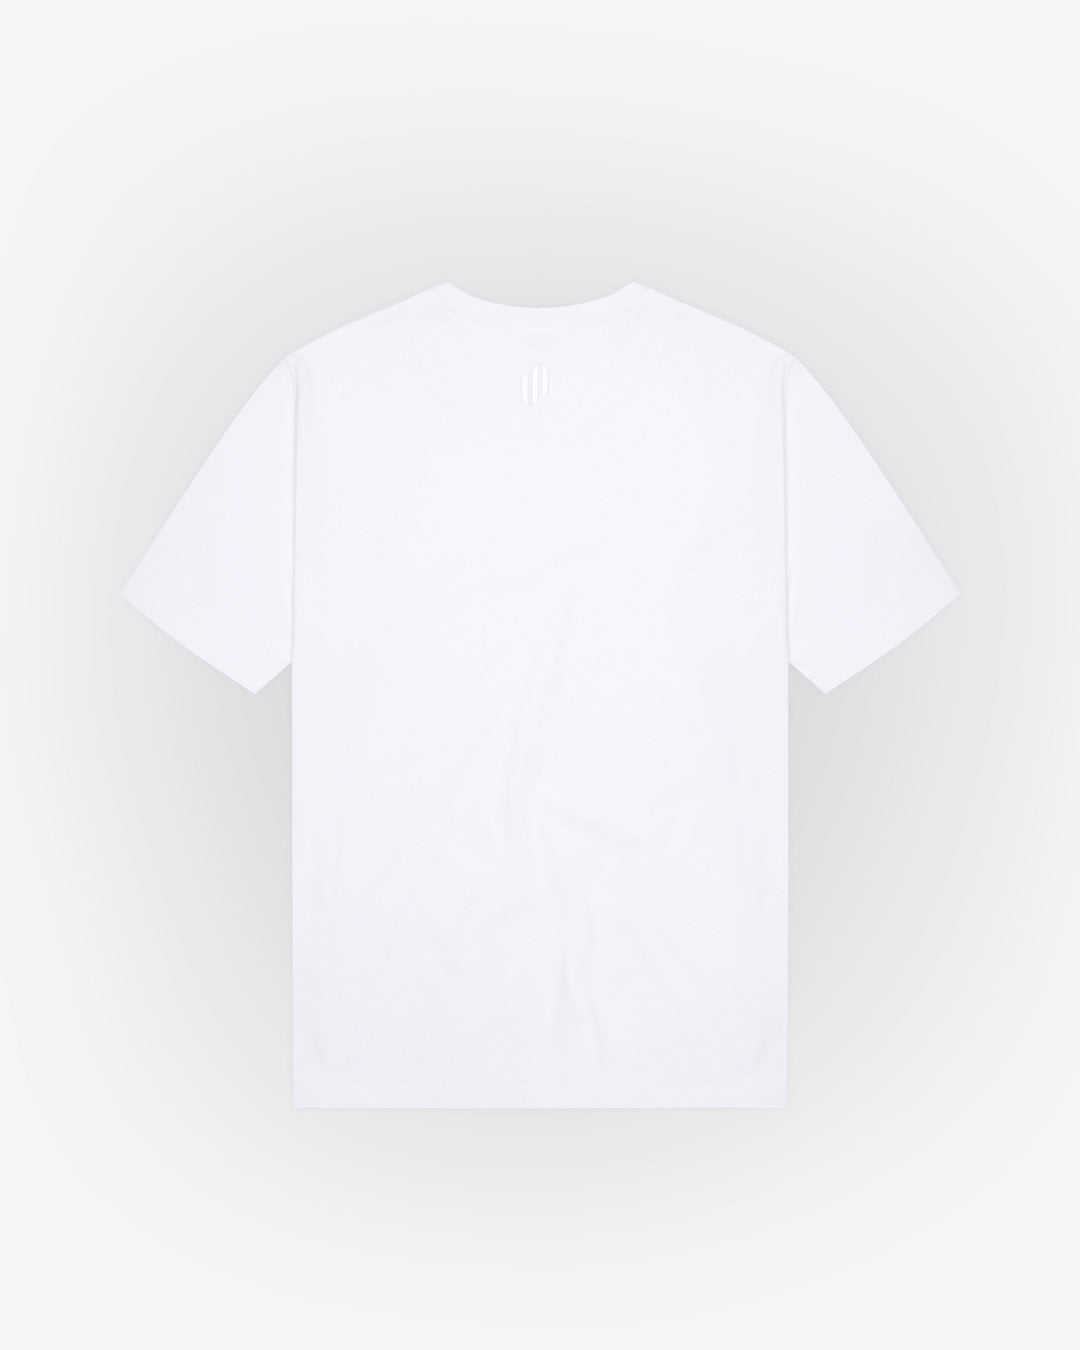 VC: GB-ENG - Women's Vintage White T-Shirt - England